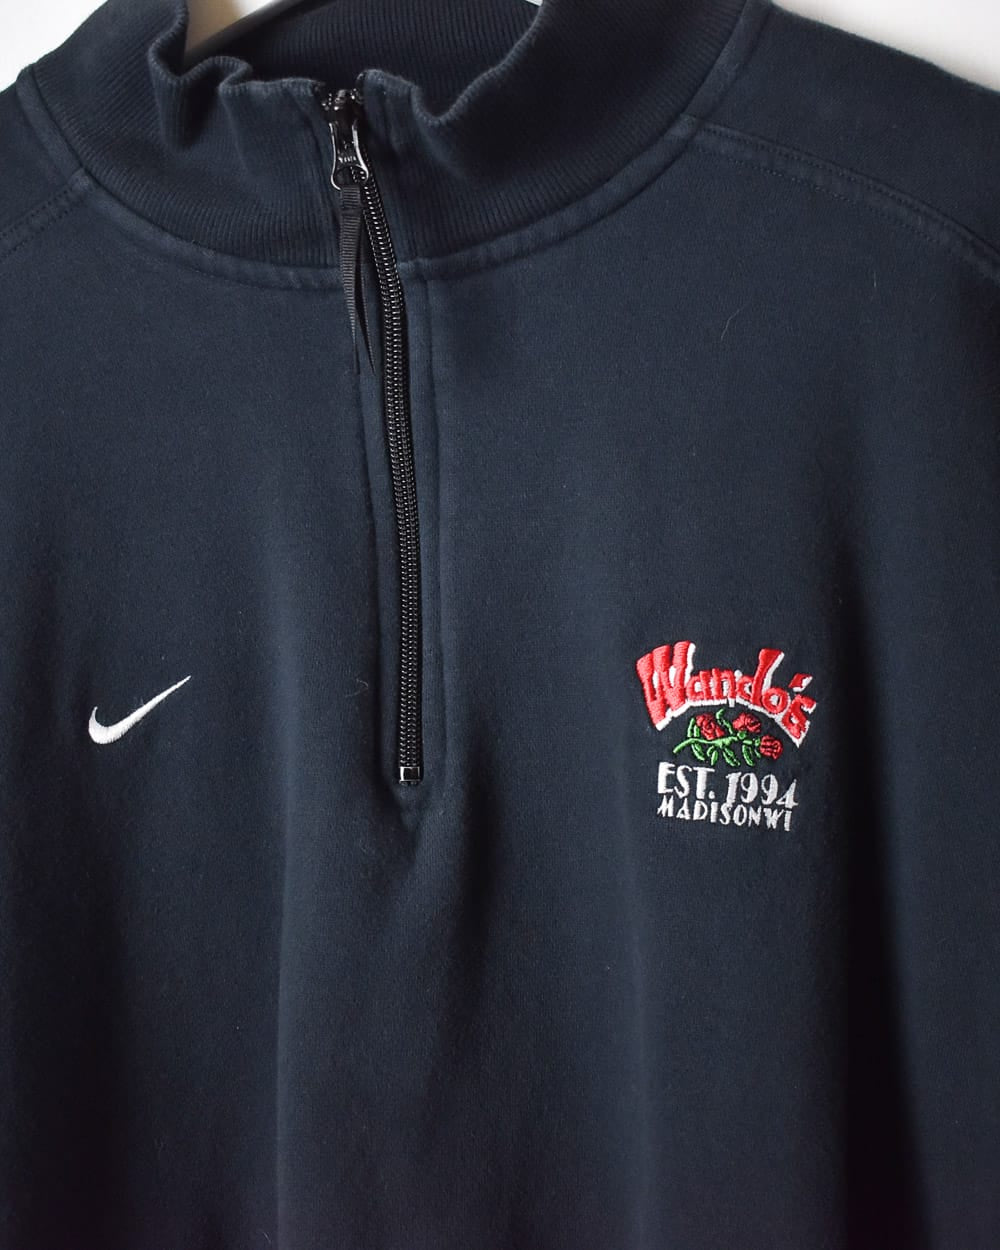 Black Nike Team Wando's 1/4 Zip Sweatshirt - XX-Large